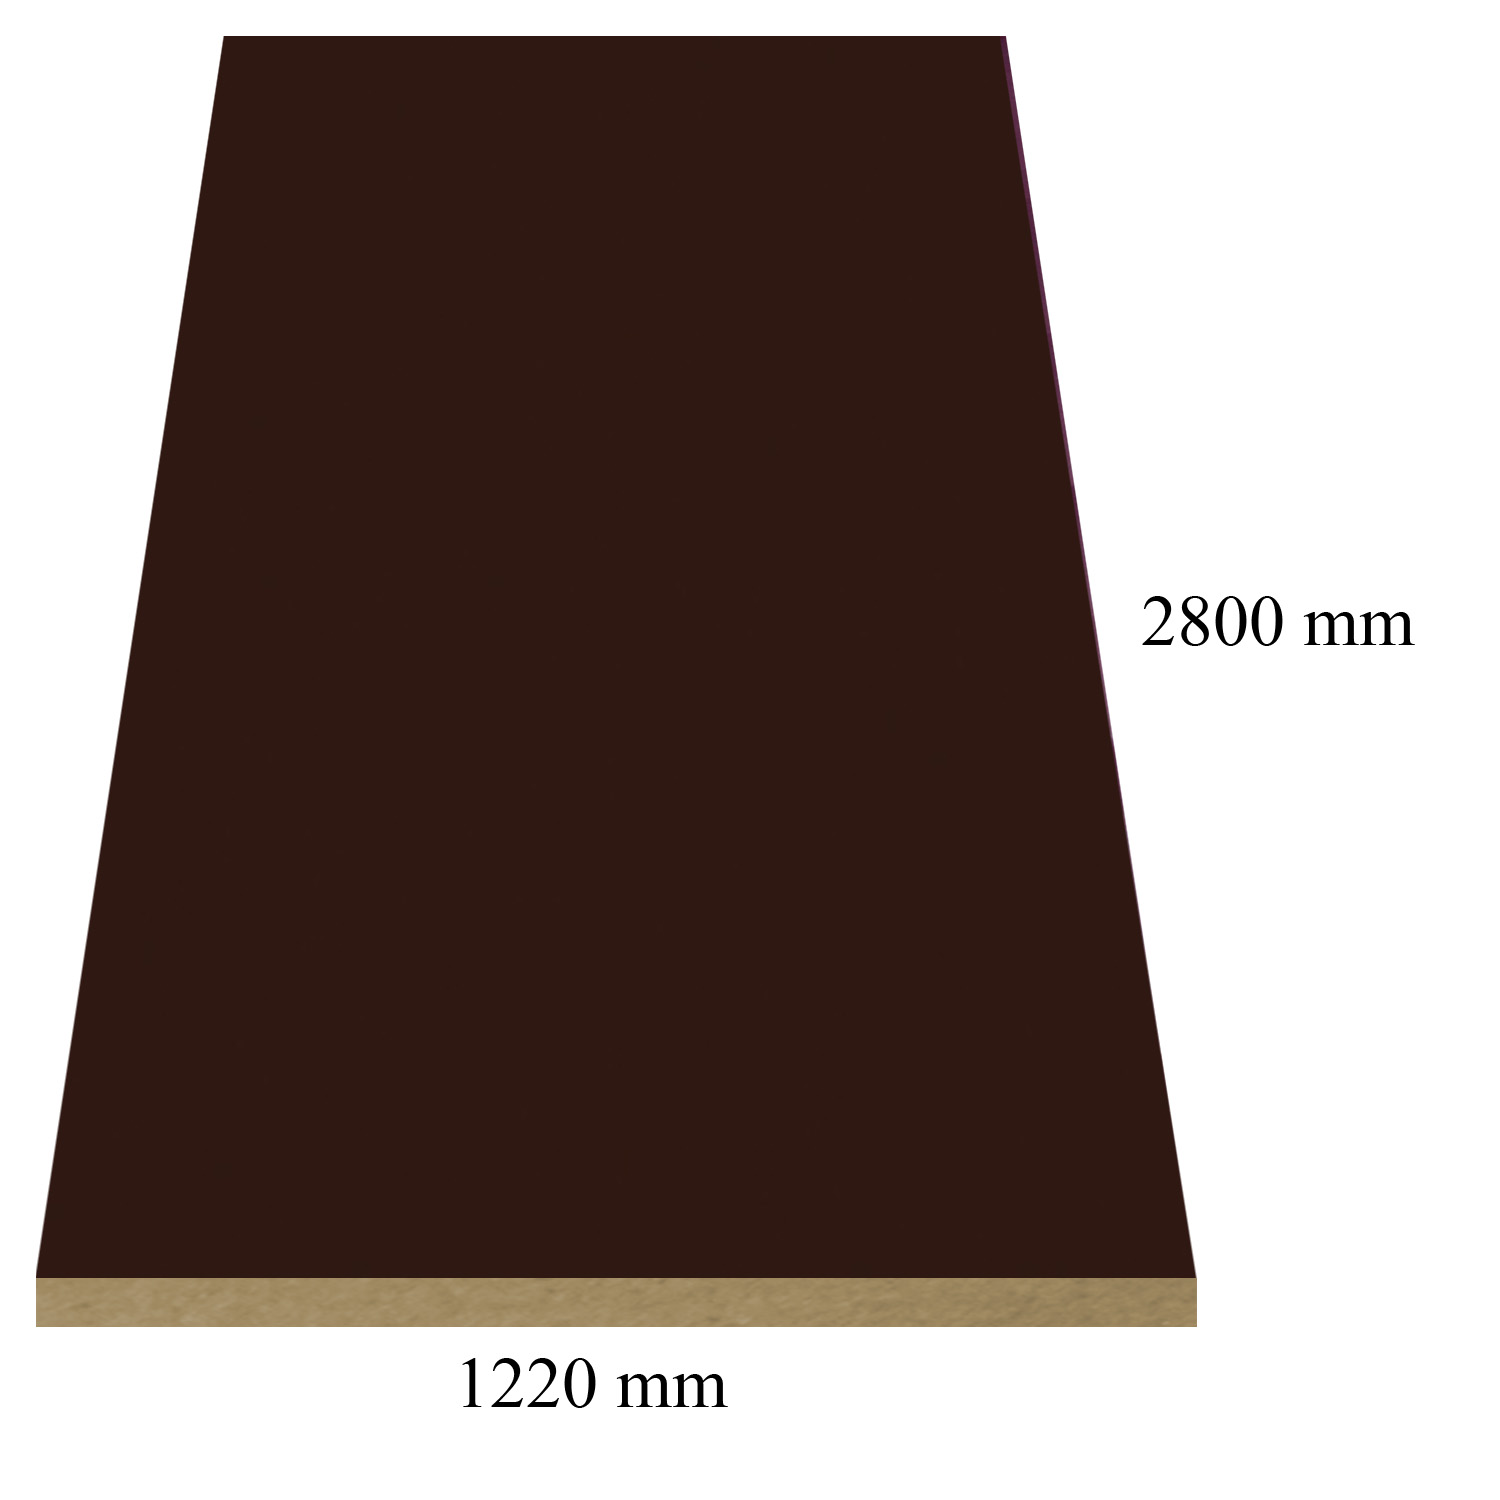 149 Brown high gloss - PVC coated 18 mm MDF